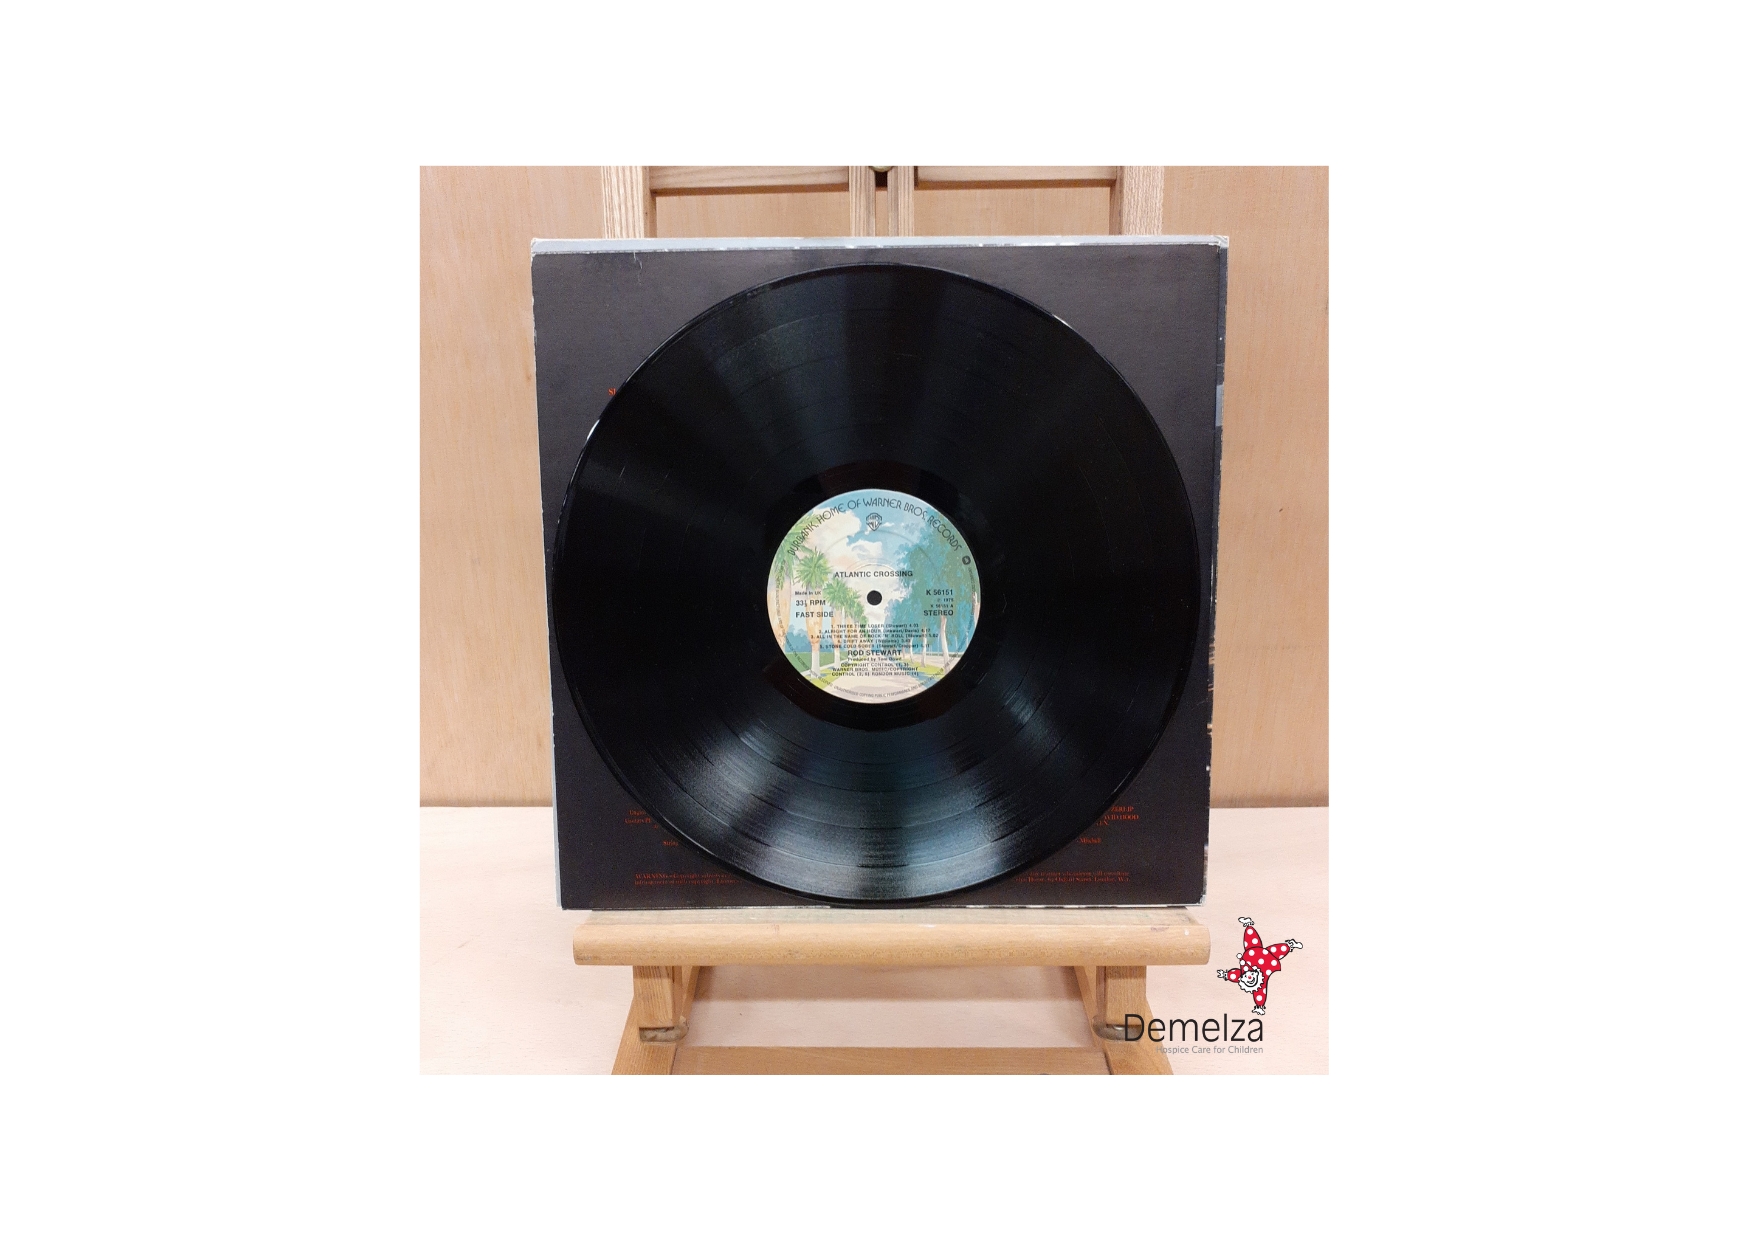 Rod Stewart - Atlantic Crossing Vinyl Album